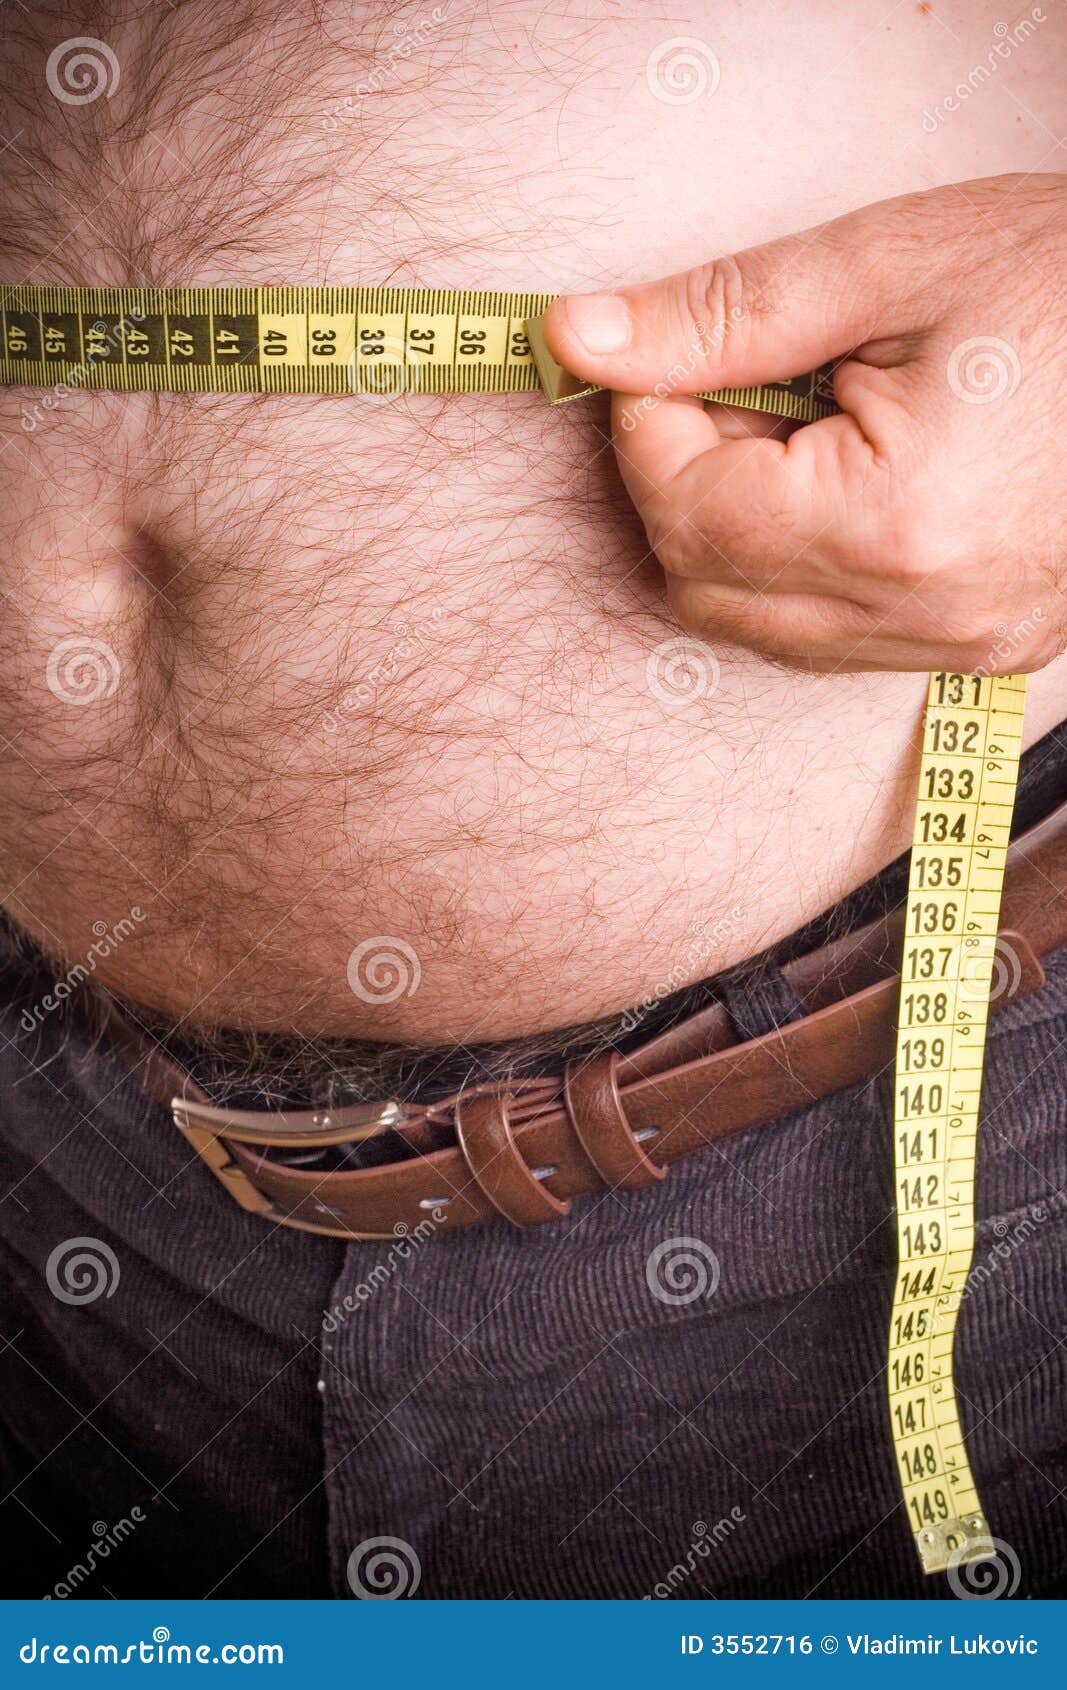 измерить обхват груди у мужчин фото 99